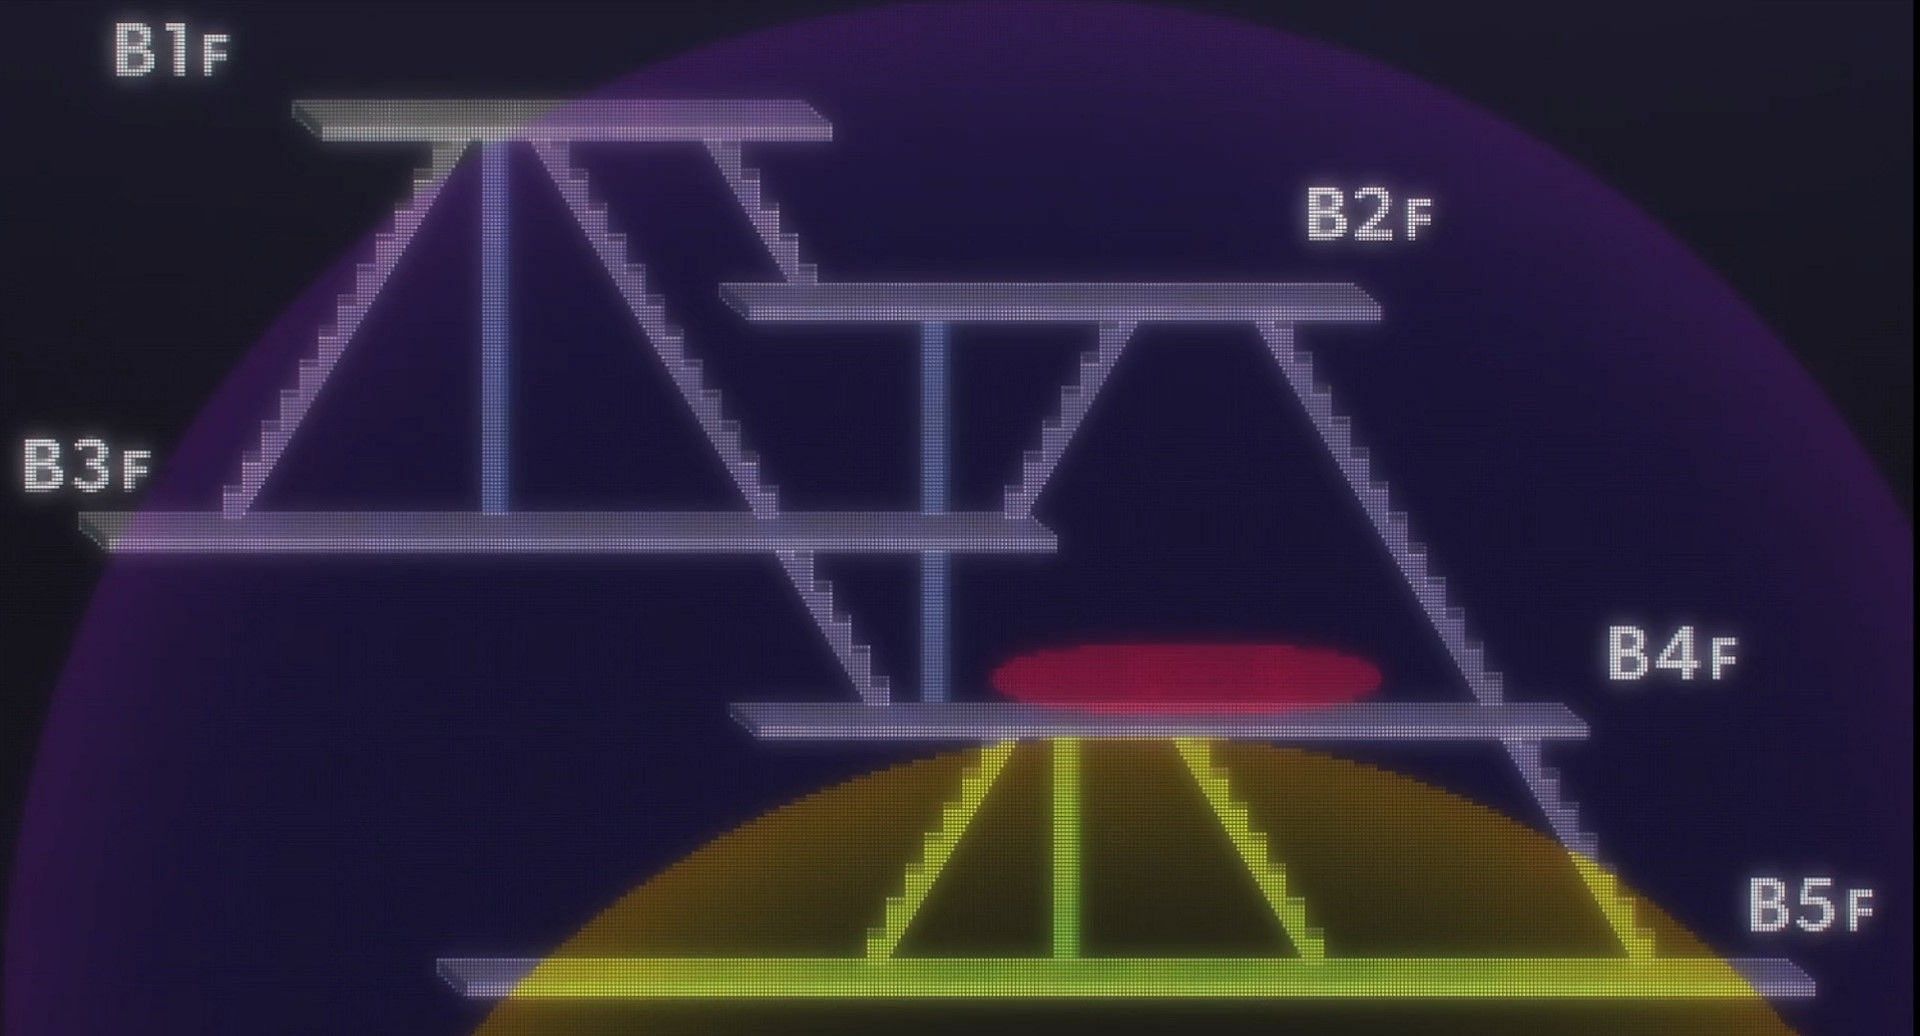 Tokyo Metro Basement structure as seen in Jujutsu Kaisen anime (Image via MAPPA)